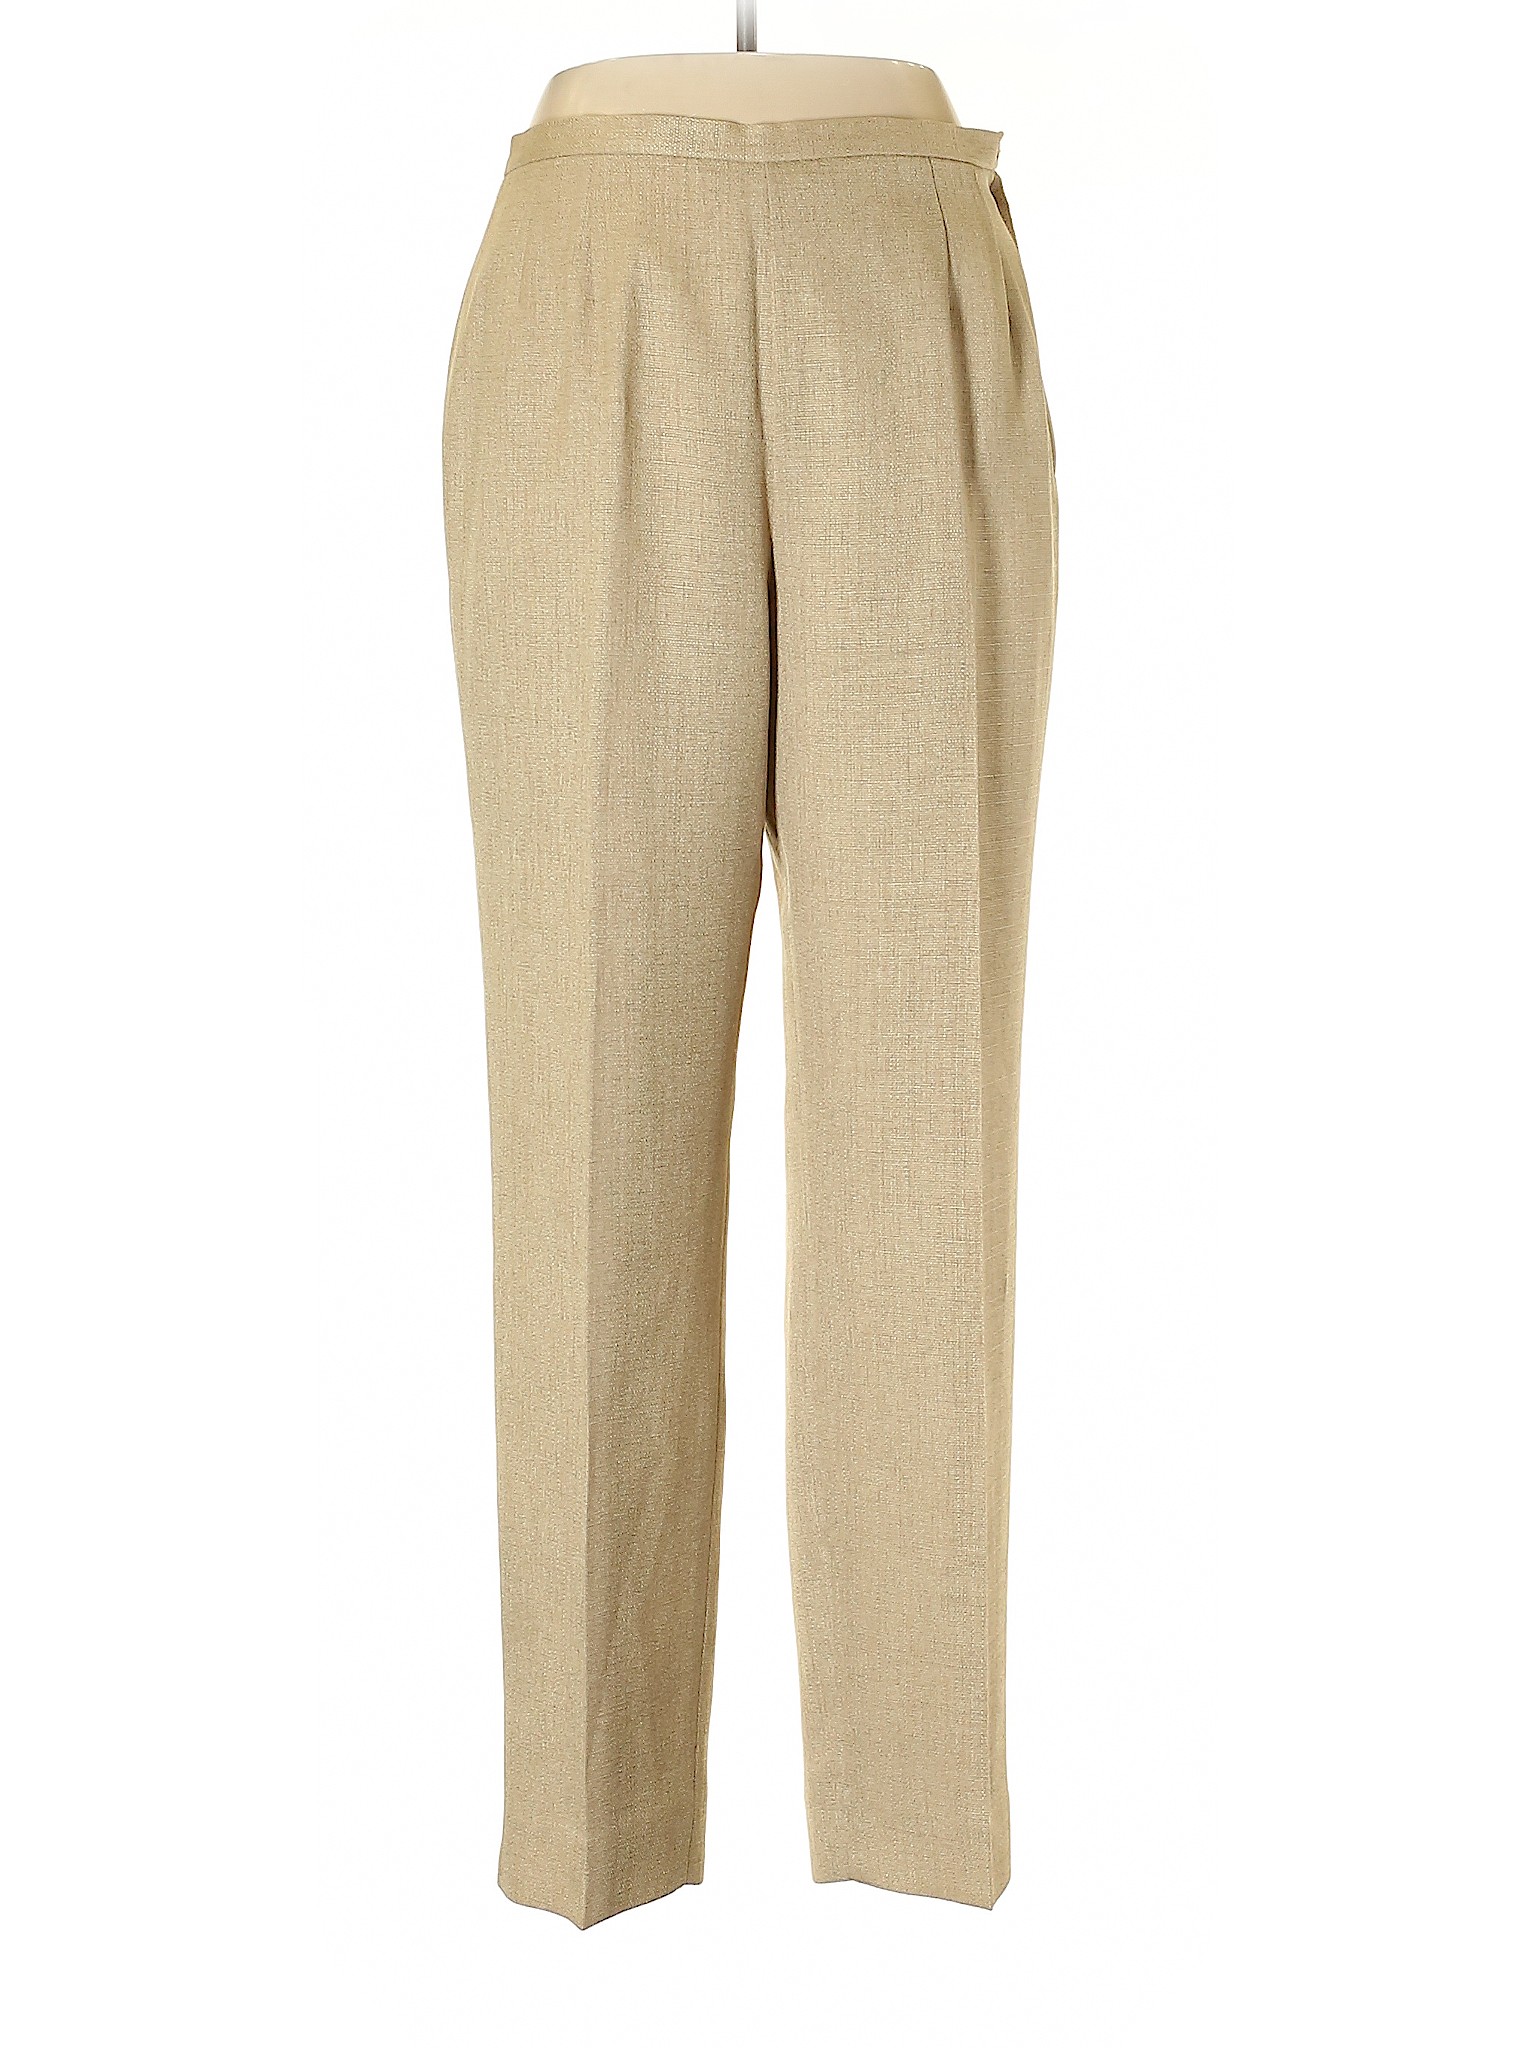 Kasper A.S.L. Women Brown Dress Pants 12 Petites | eBay